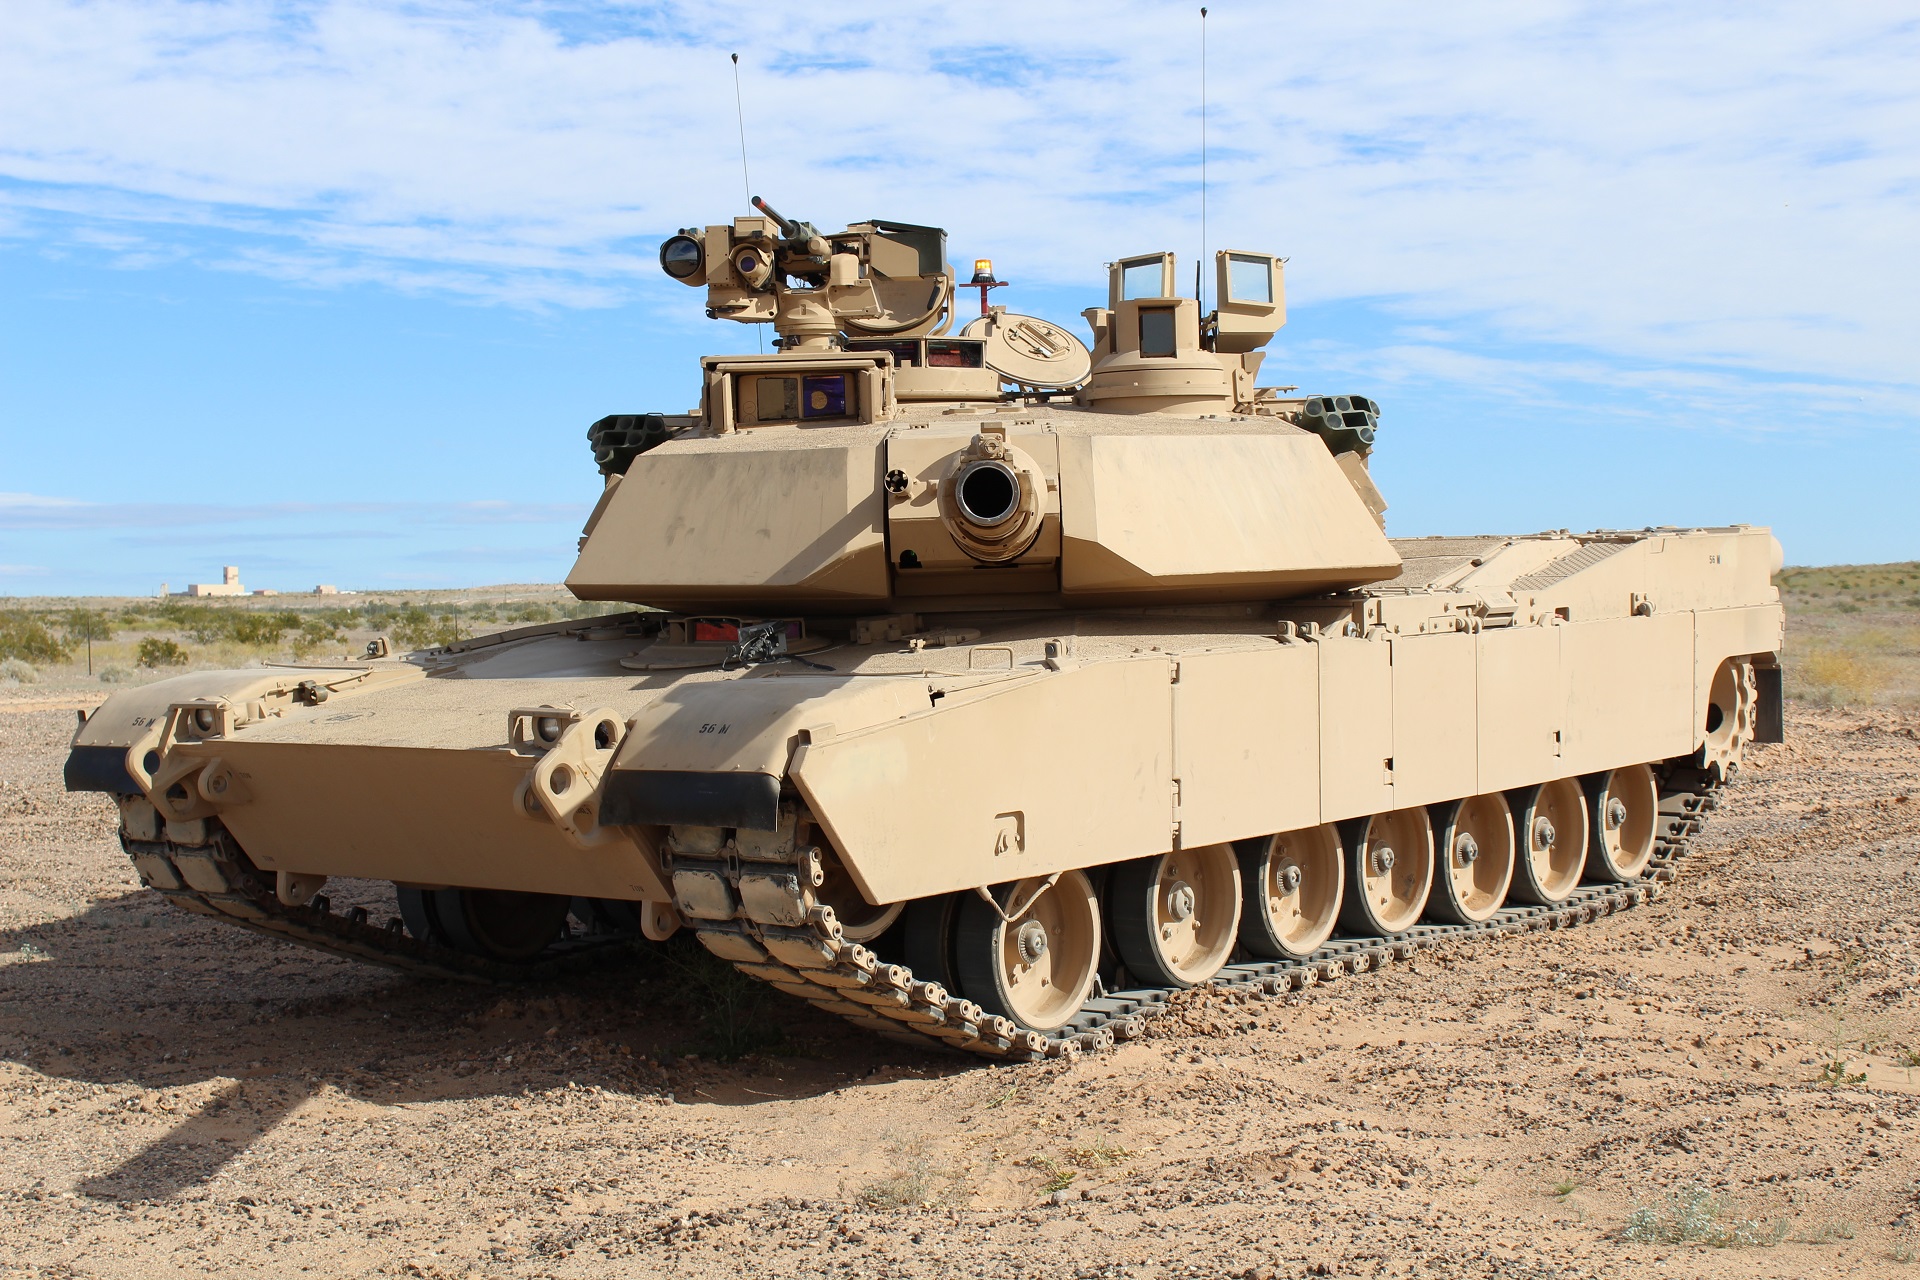 Abrams main battle tank